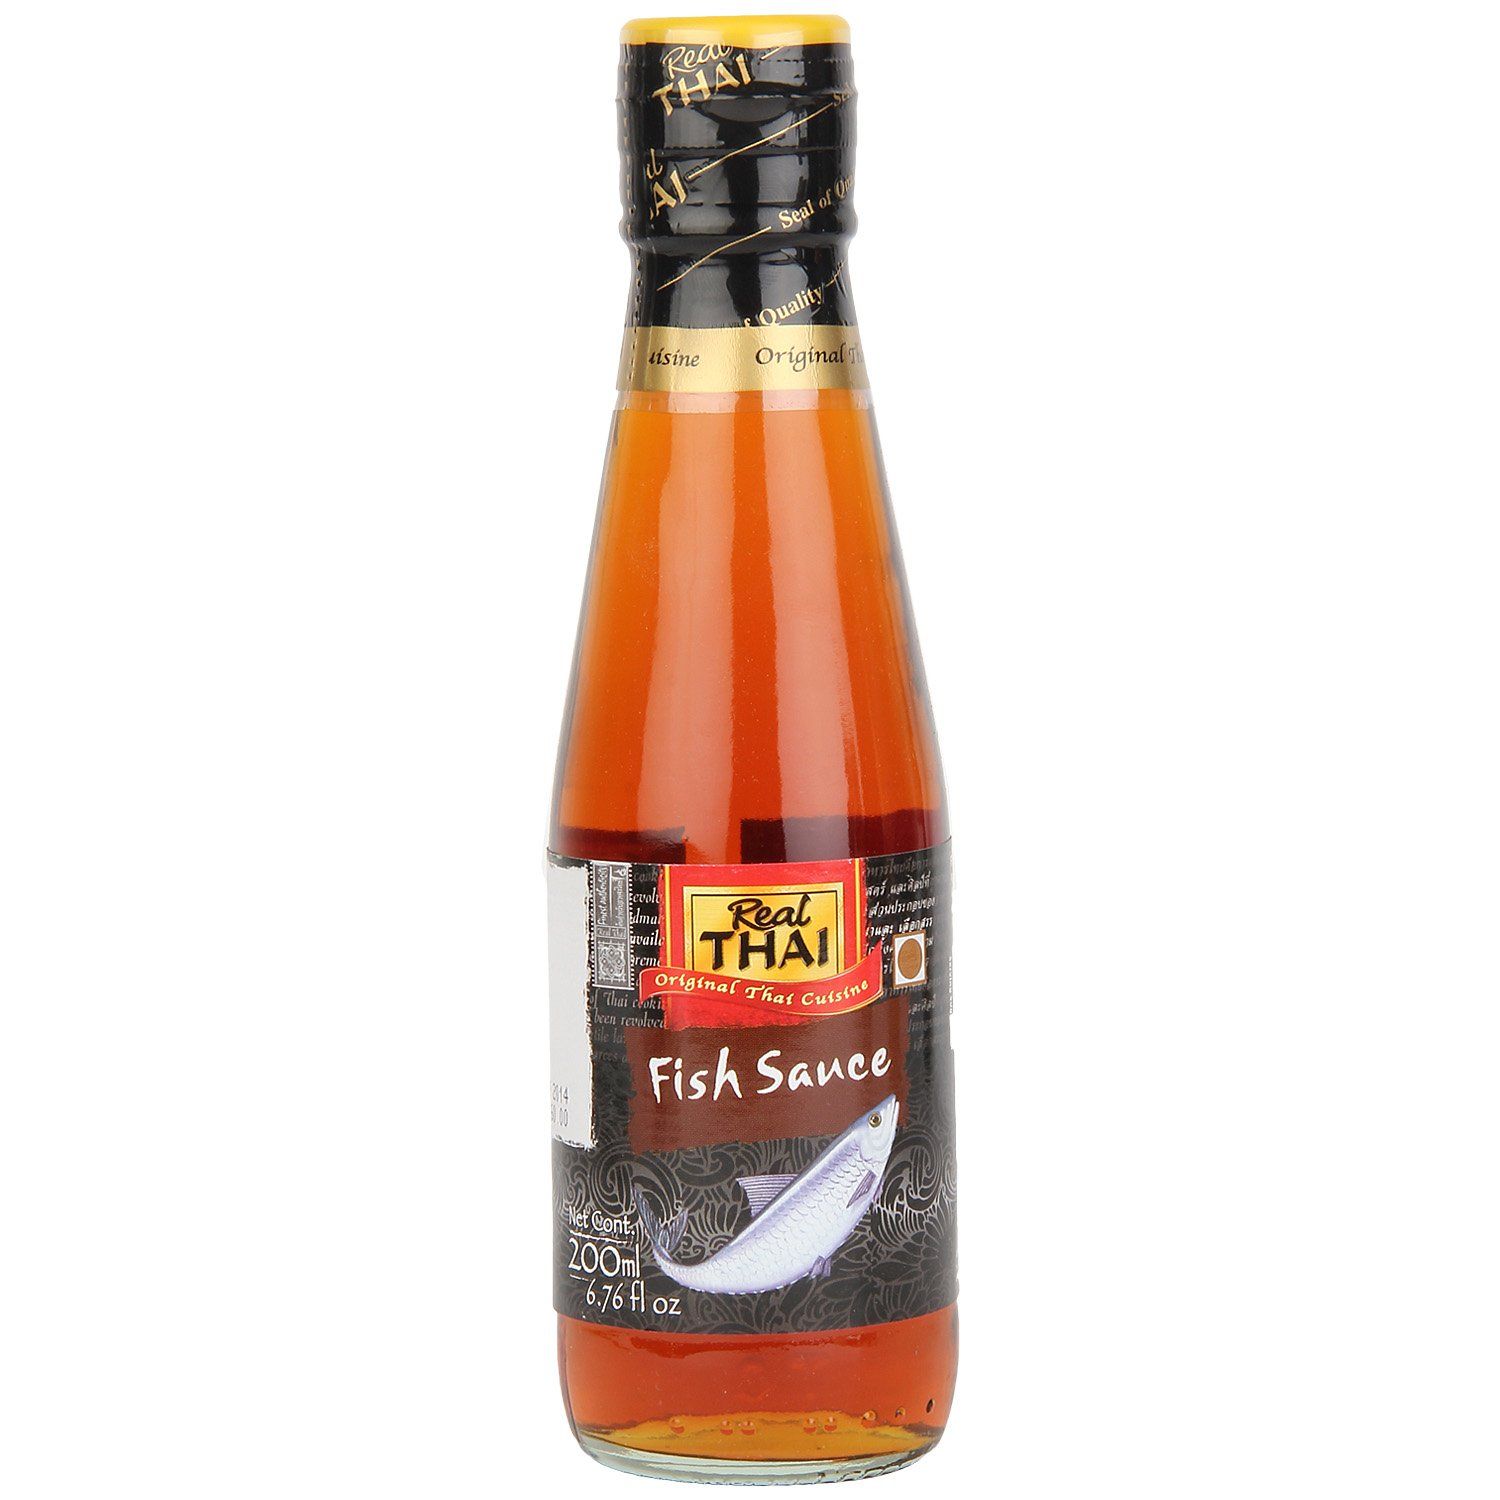 Real Thai Fish Sauce Image